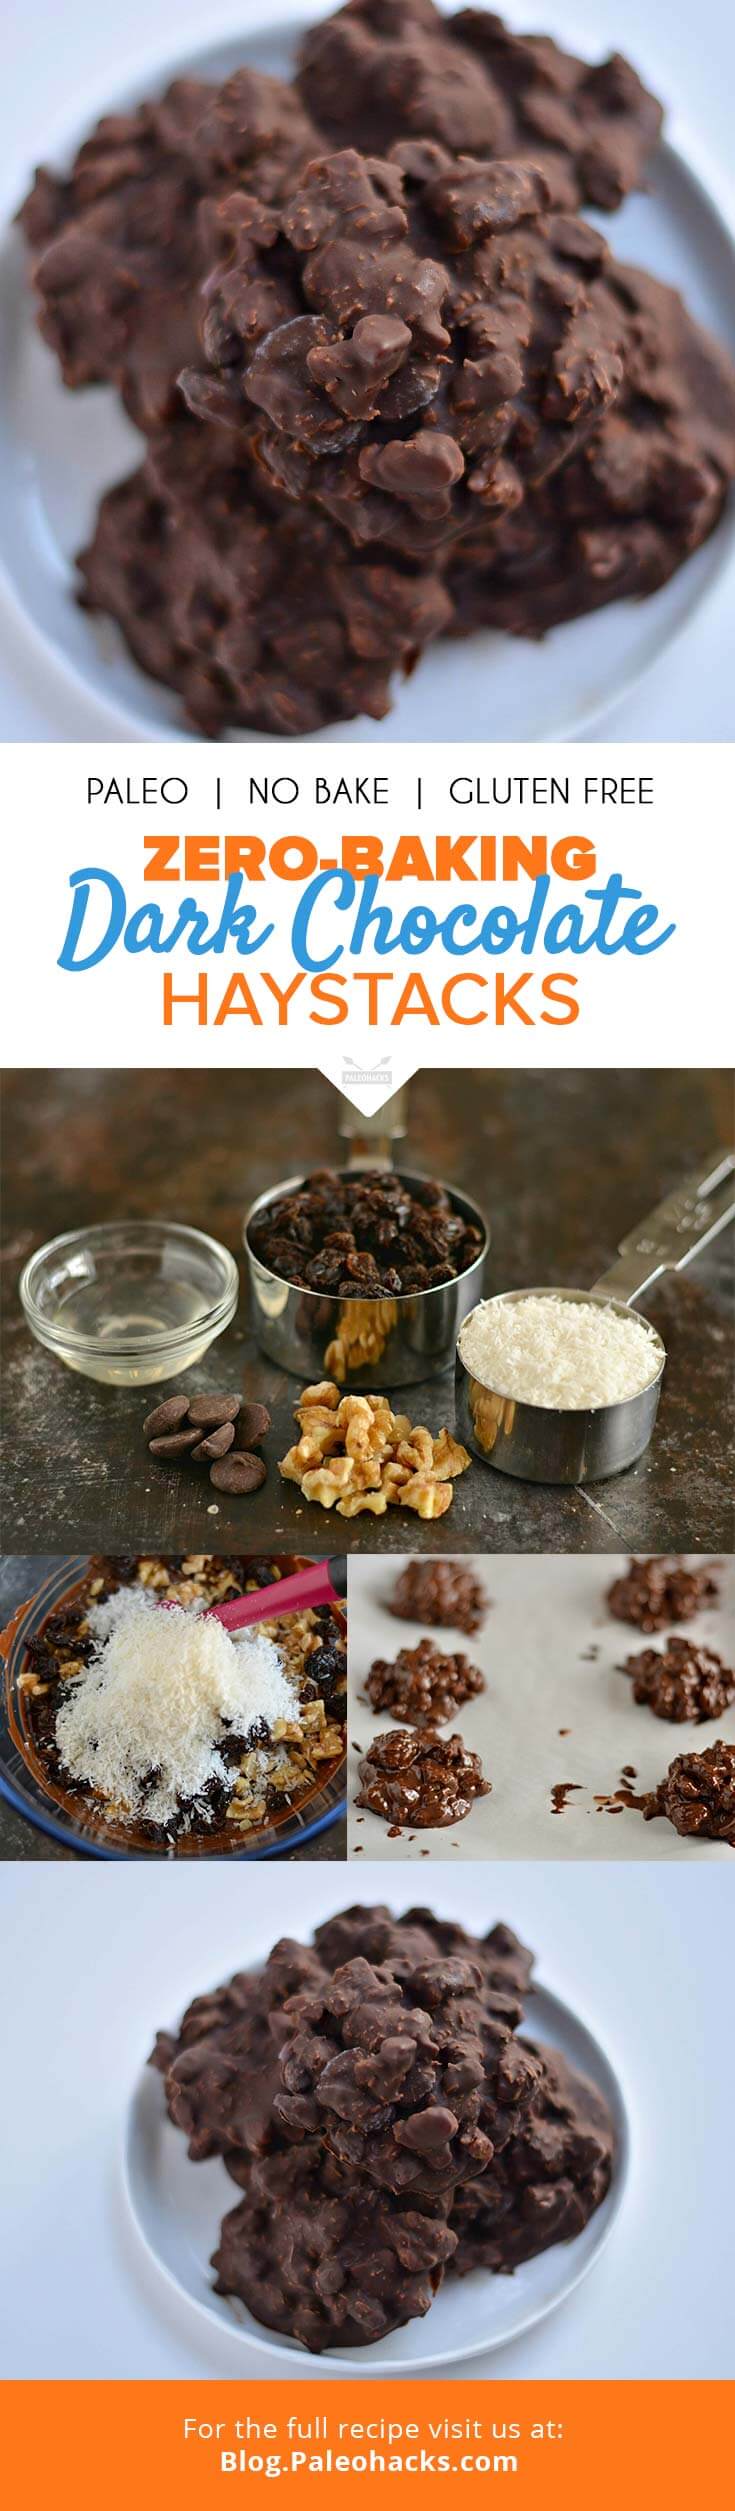 dark chocolate haystacks pin